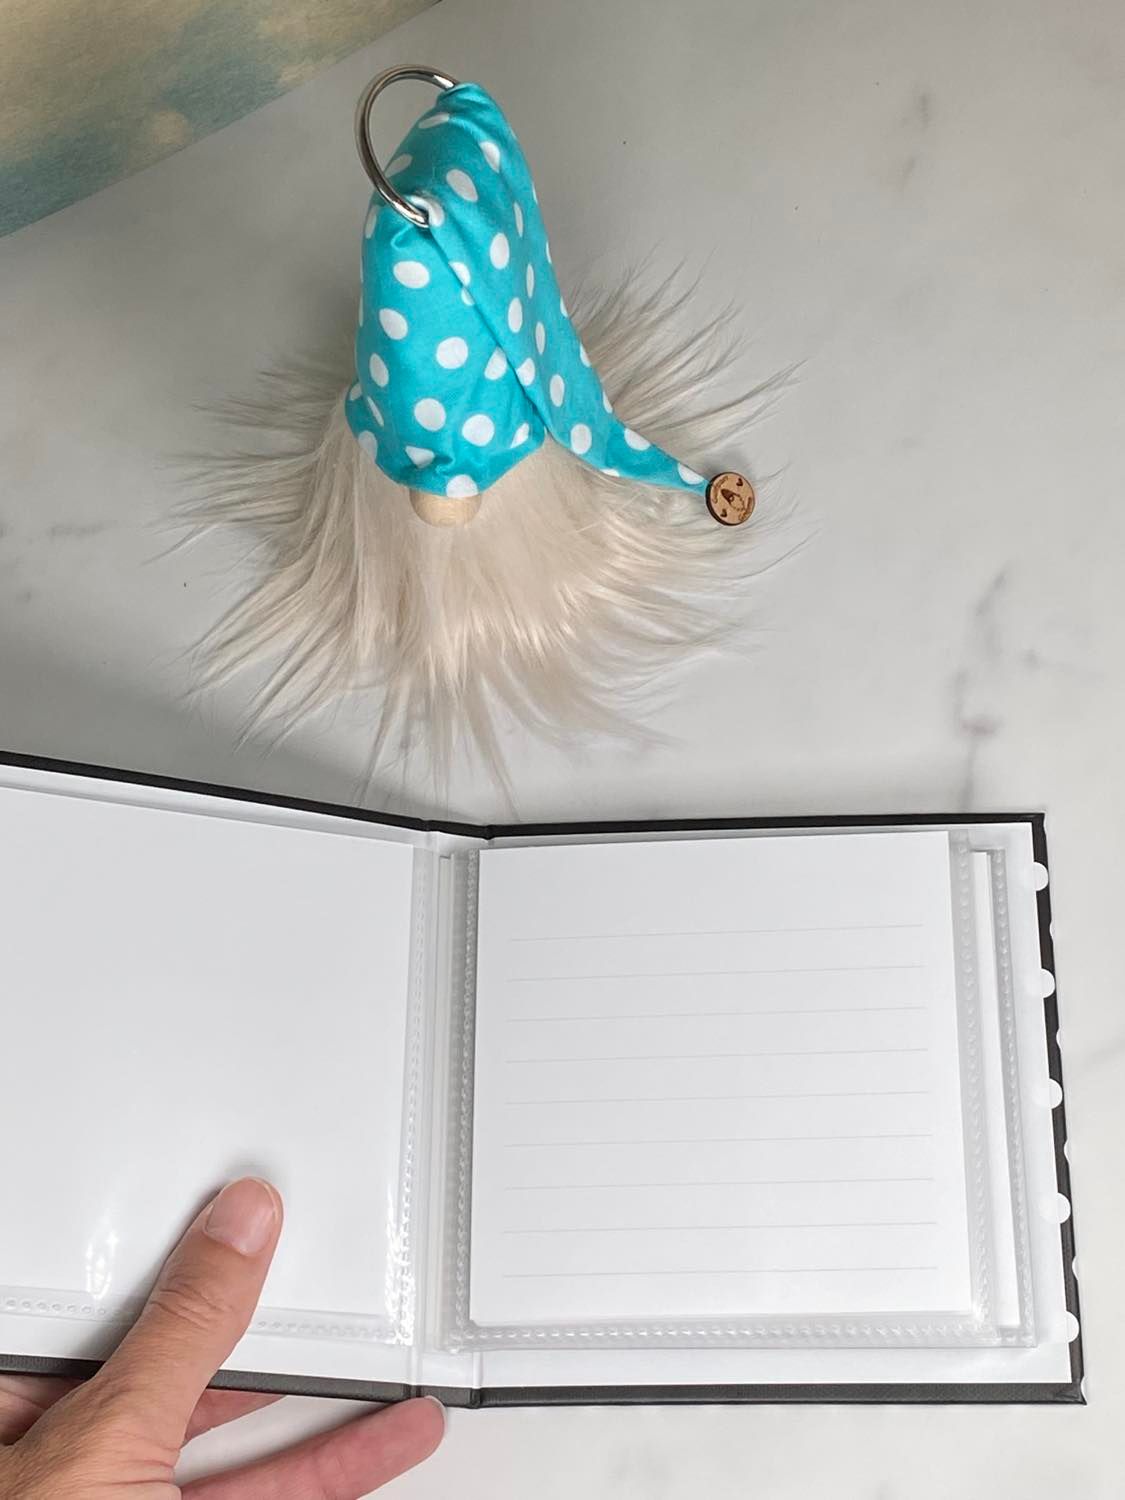 Gift Set - Memory Keeping Mini Photo Book Gift set with 4" Plush Gnome